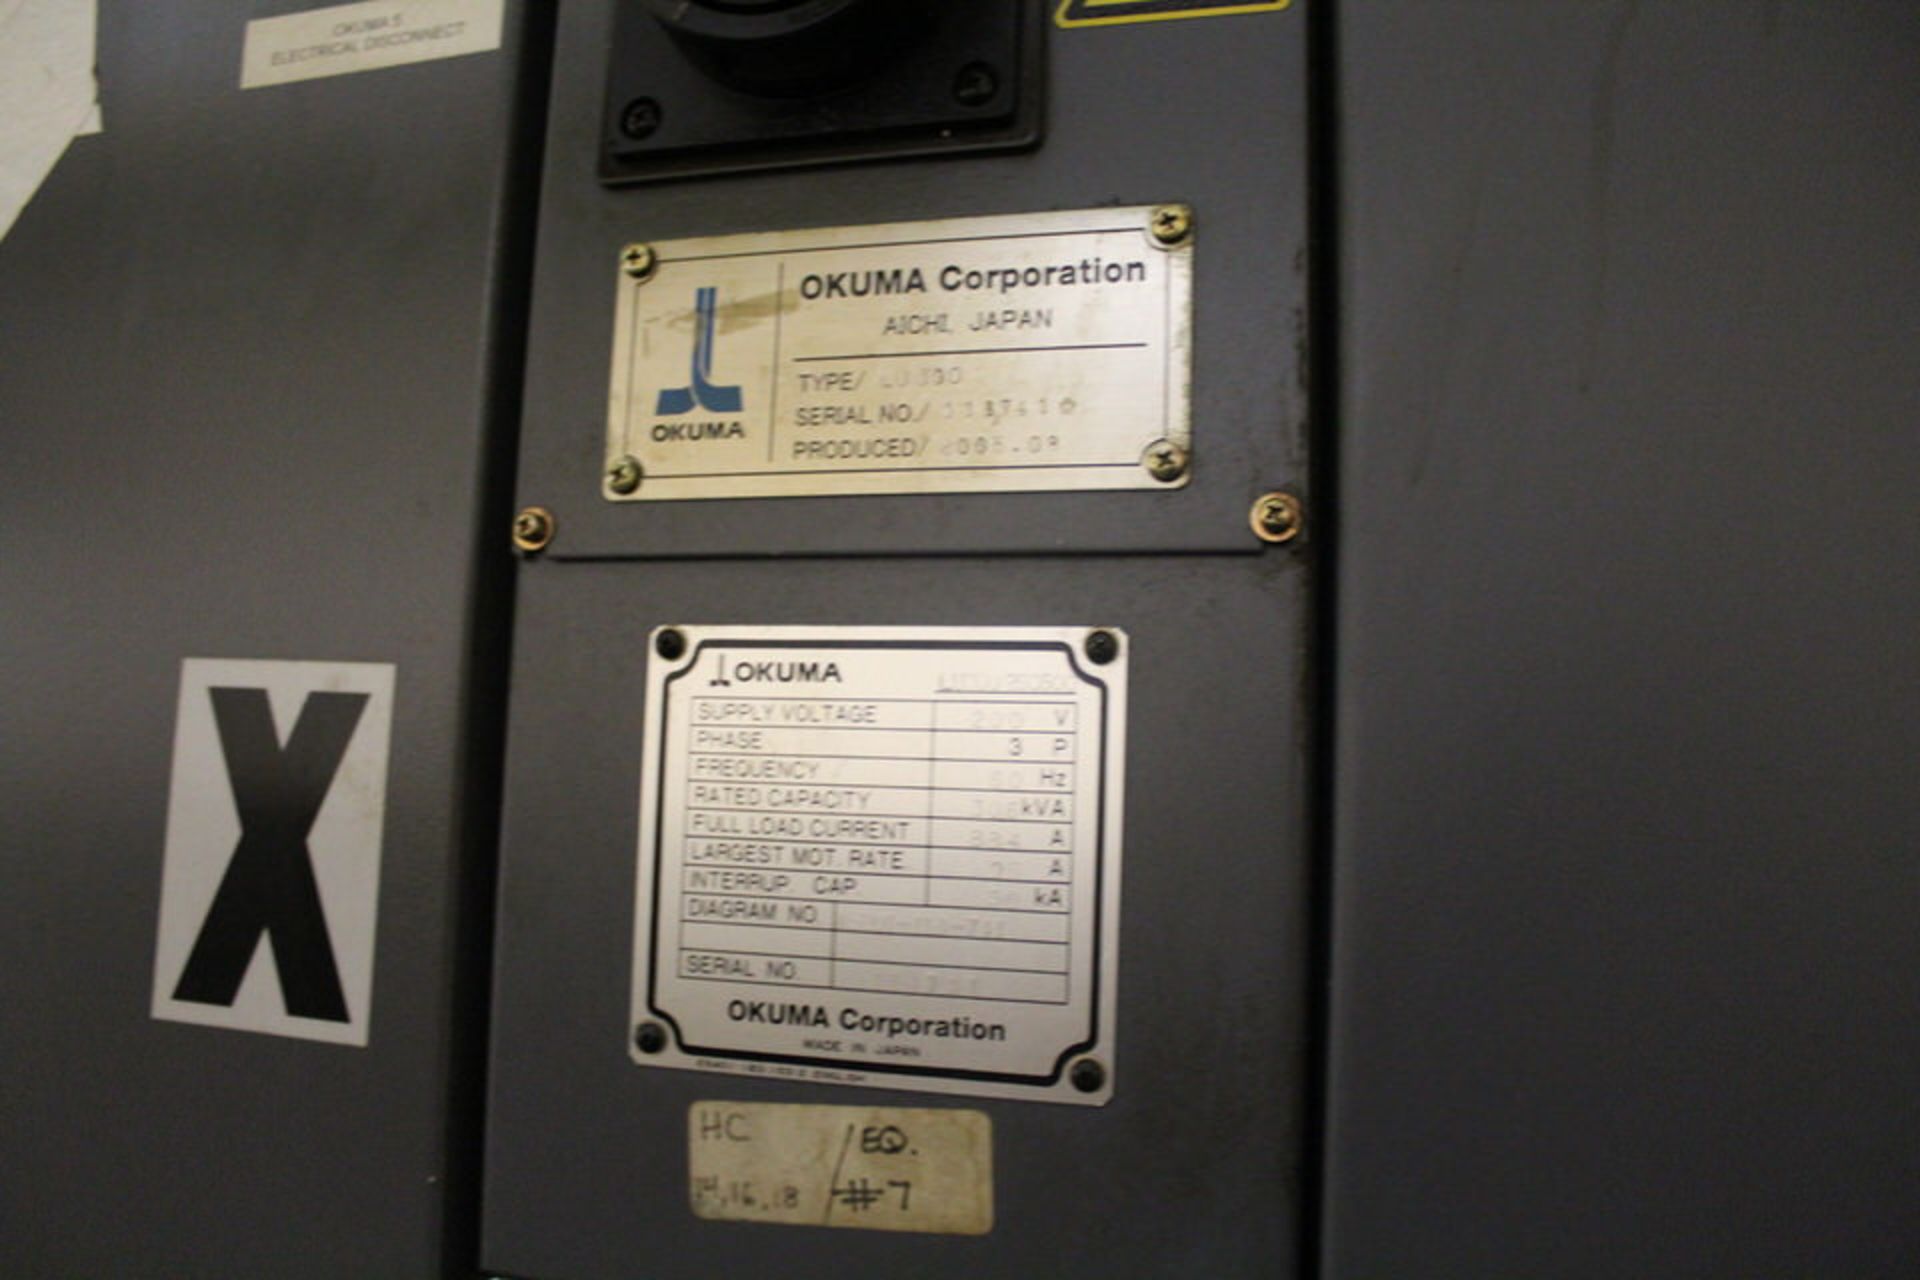 2007 OKUMA SIMUL TURN LU-300 CNC LATHE, SCHUNK ROTA THW 260-81, 10" 3 JAW CHUCK, 8 STATION TURRET - Image 5 of 5